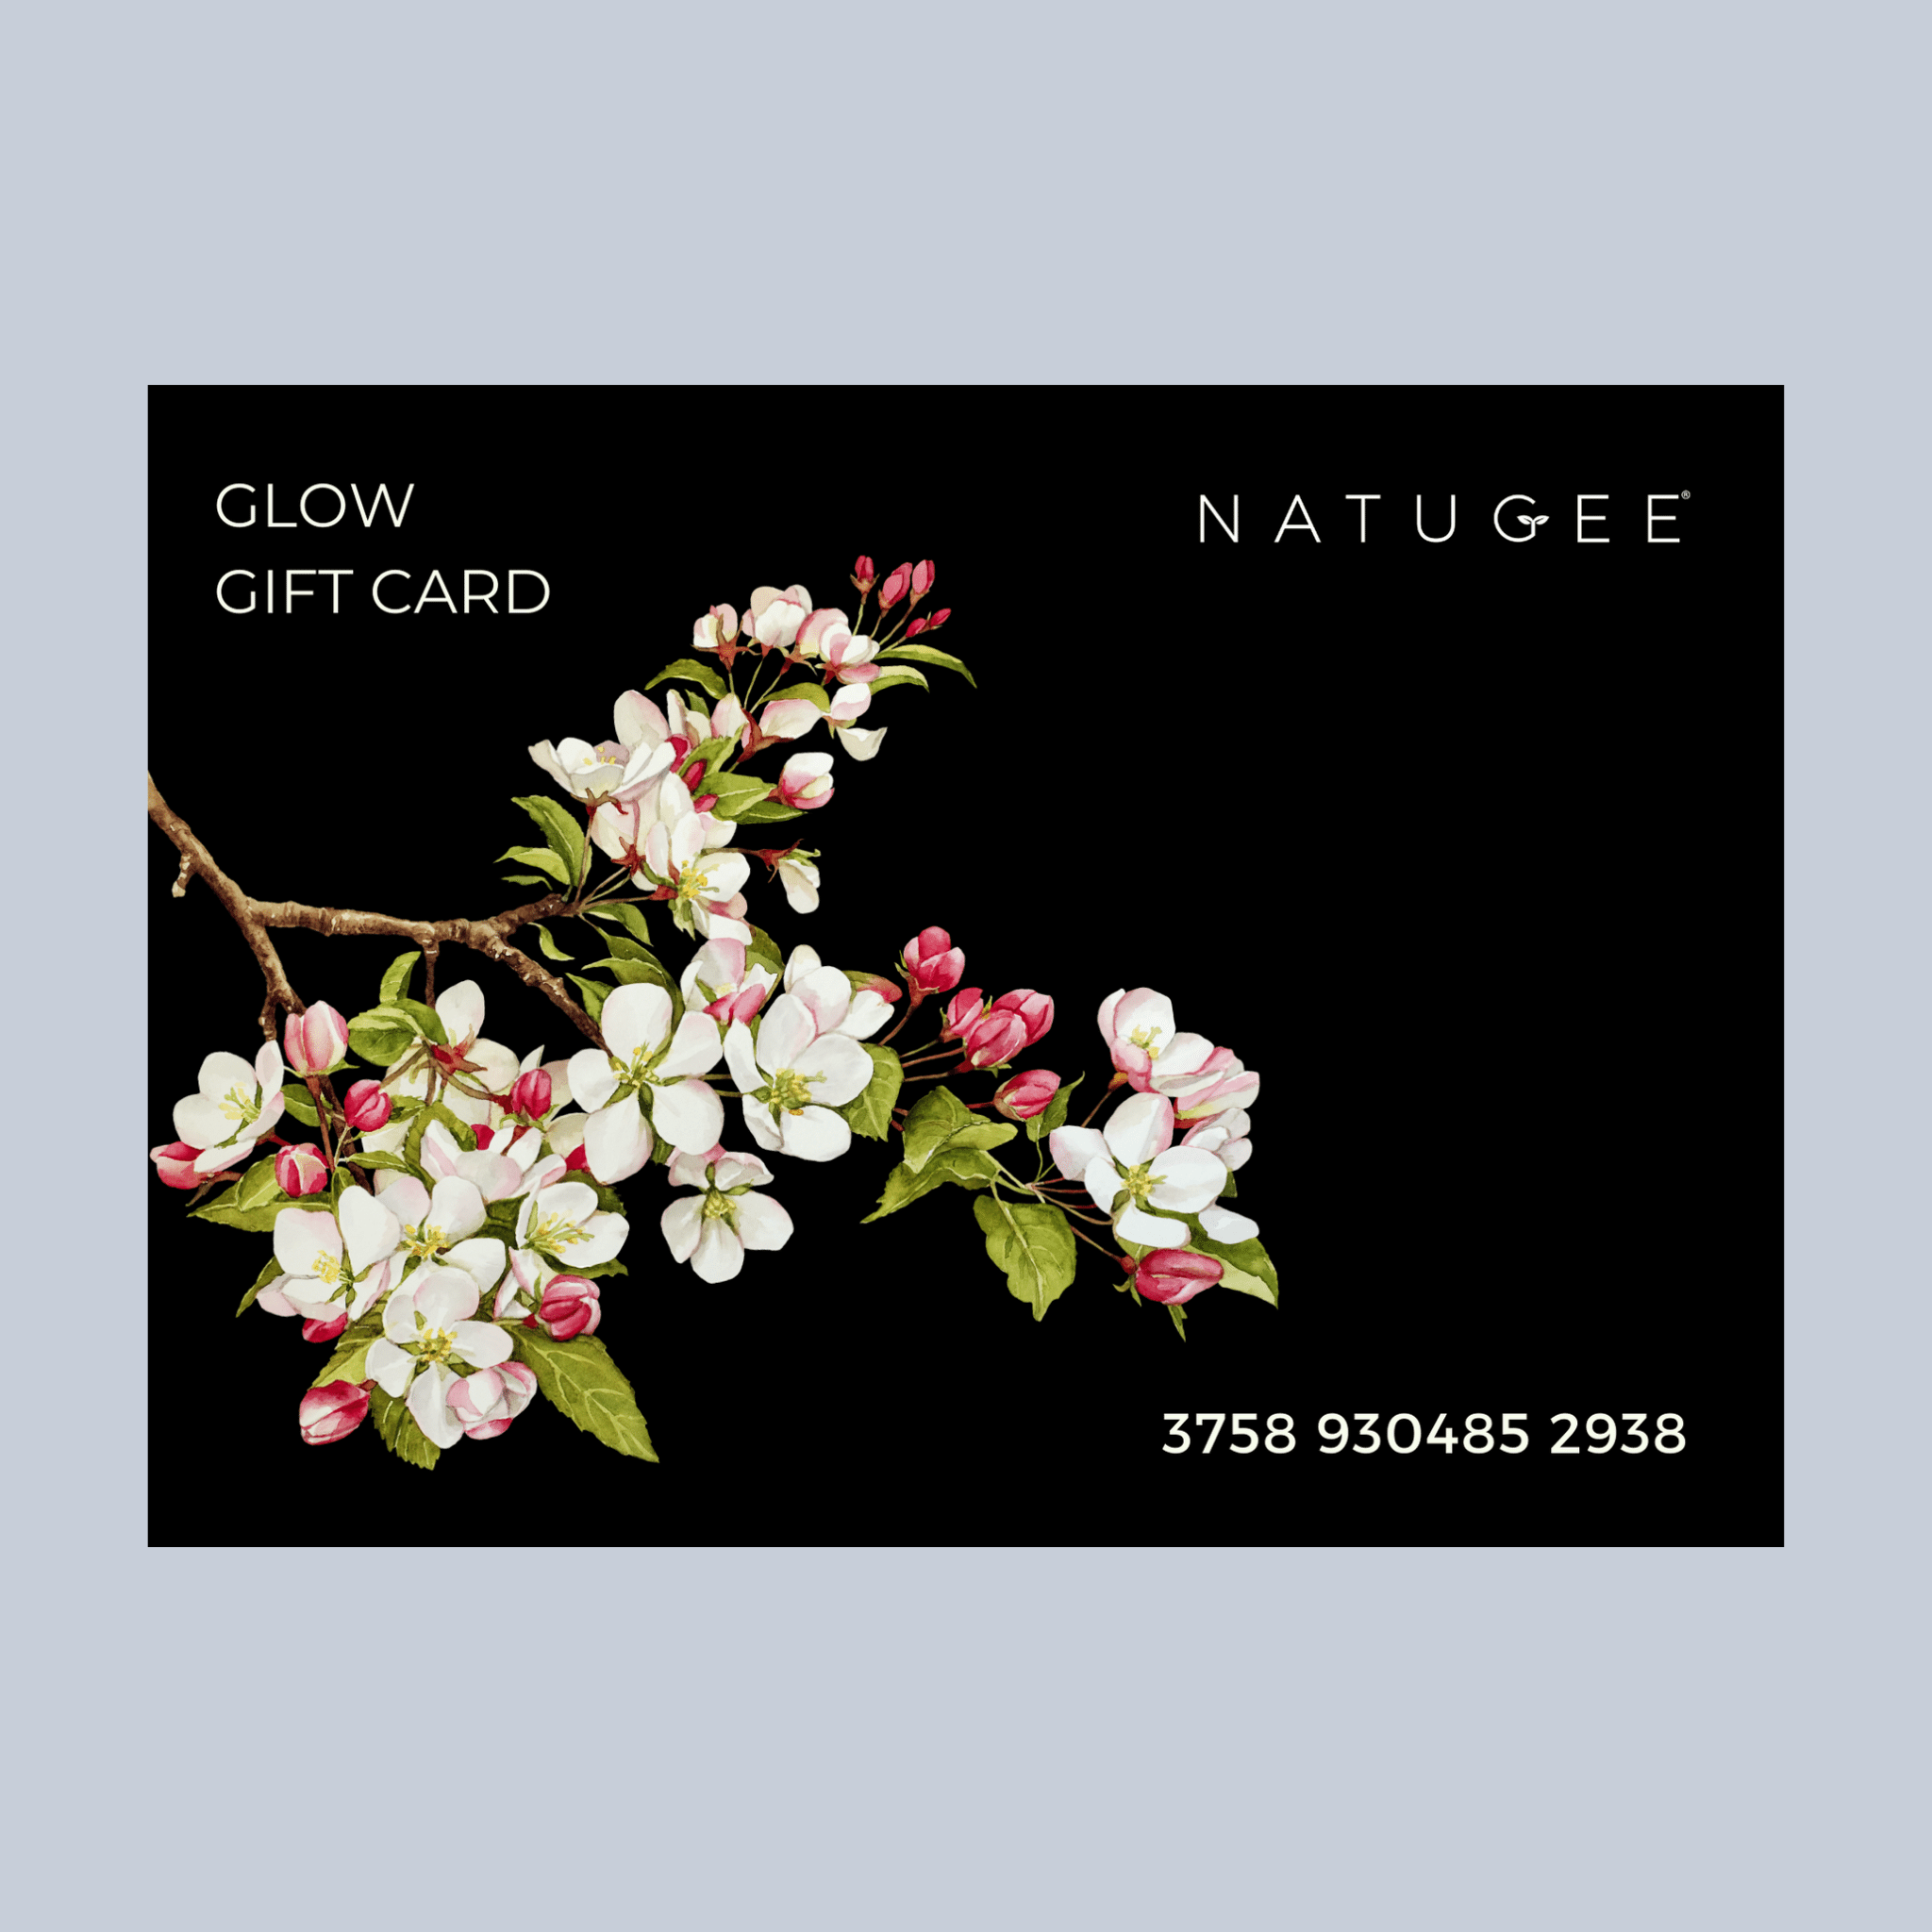 NATUGEE GIFT CARD - Natugee